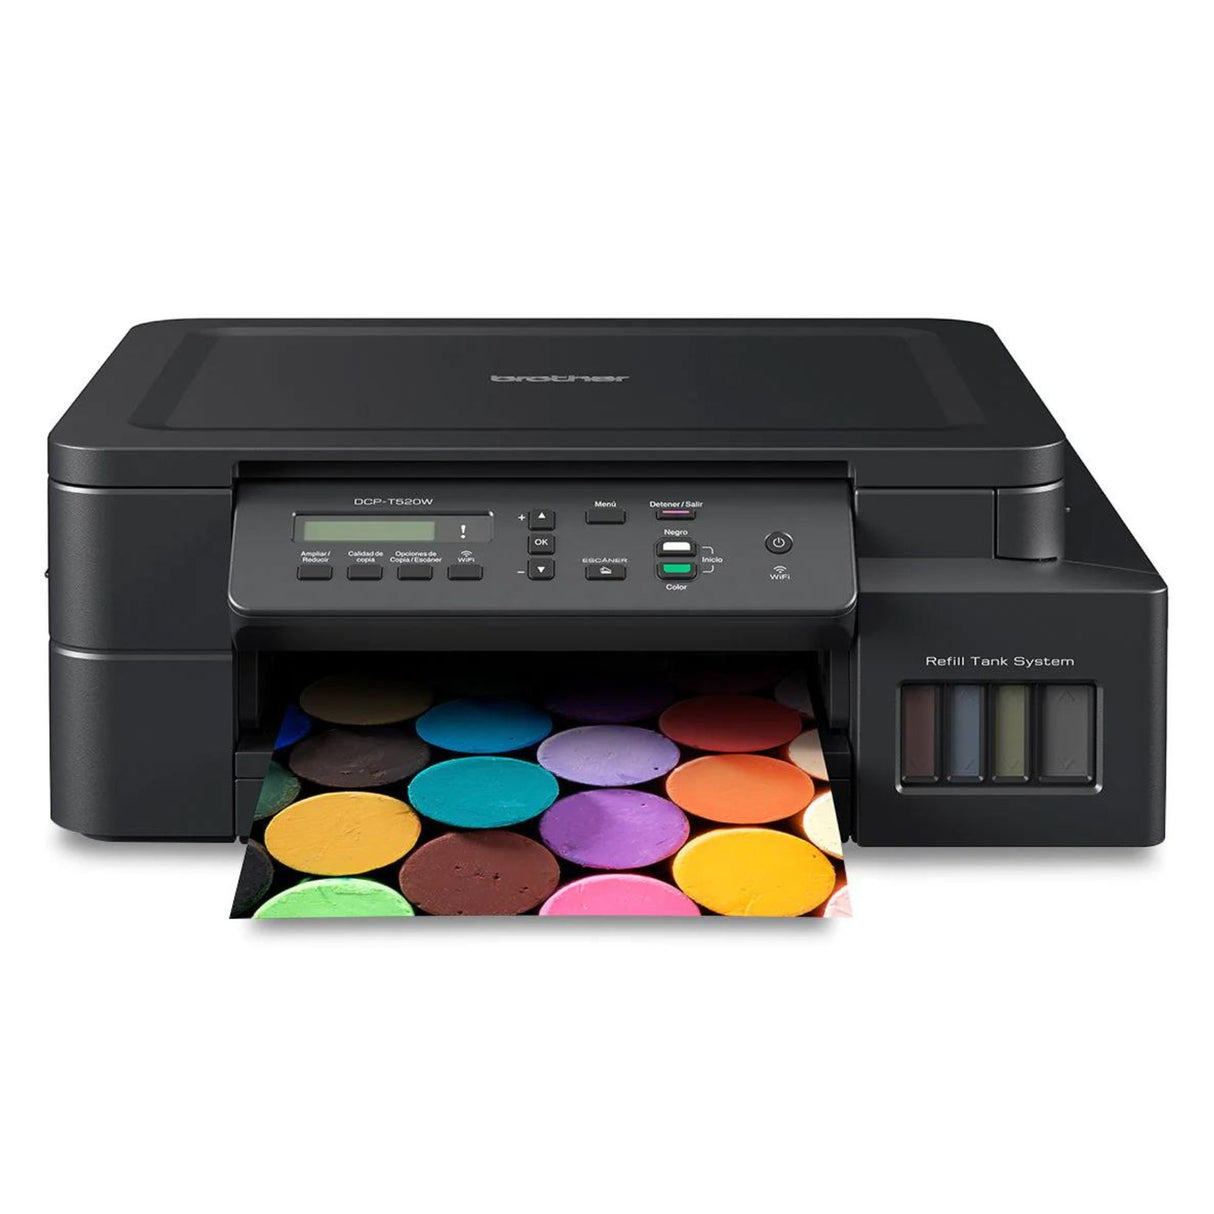 Impresora Multifuncional Brother de tinta a color DCP-T520W